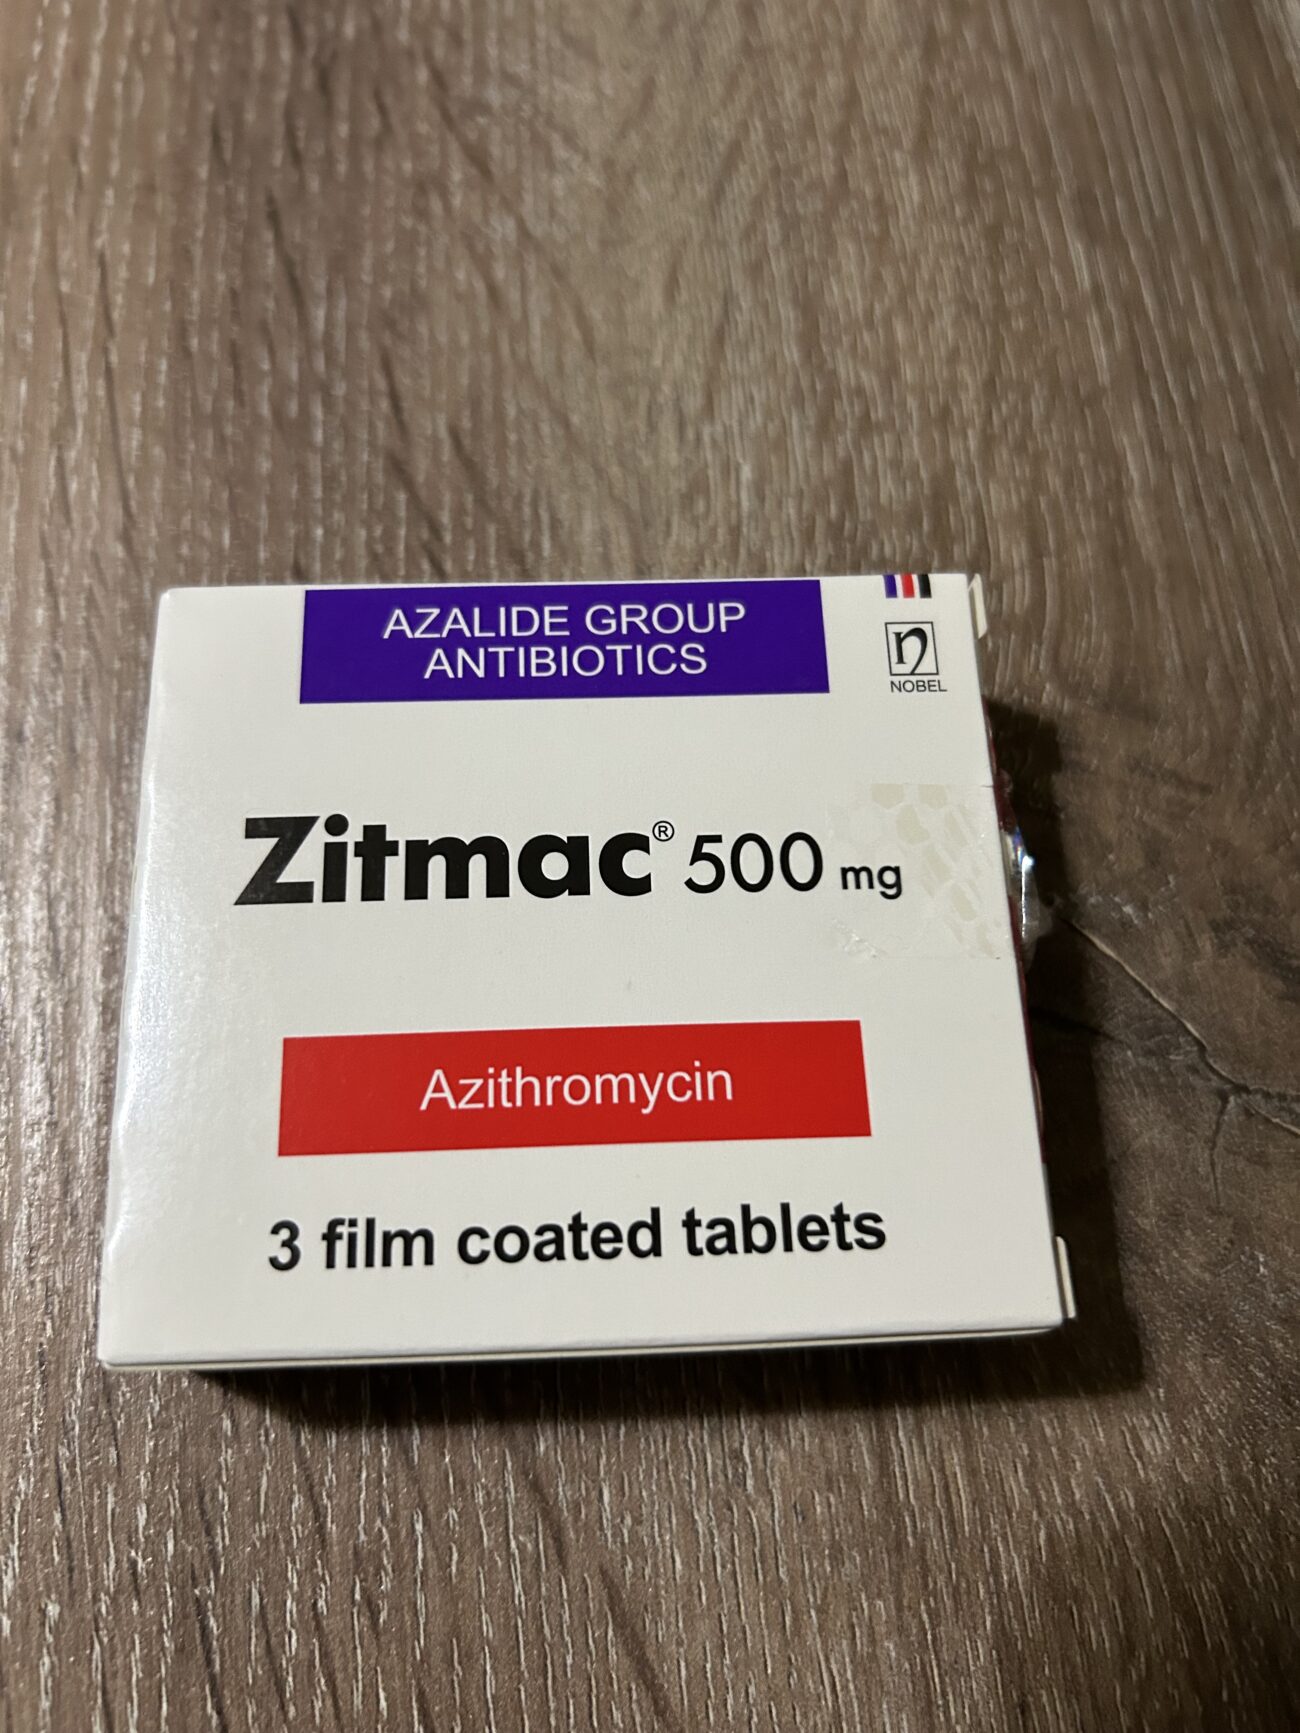 Buying the antibacterial drug azithromycin